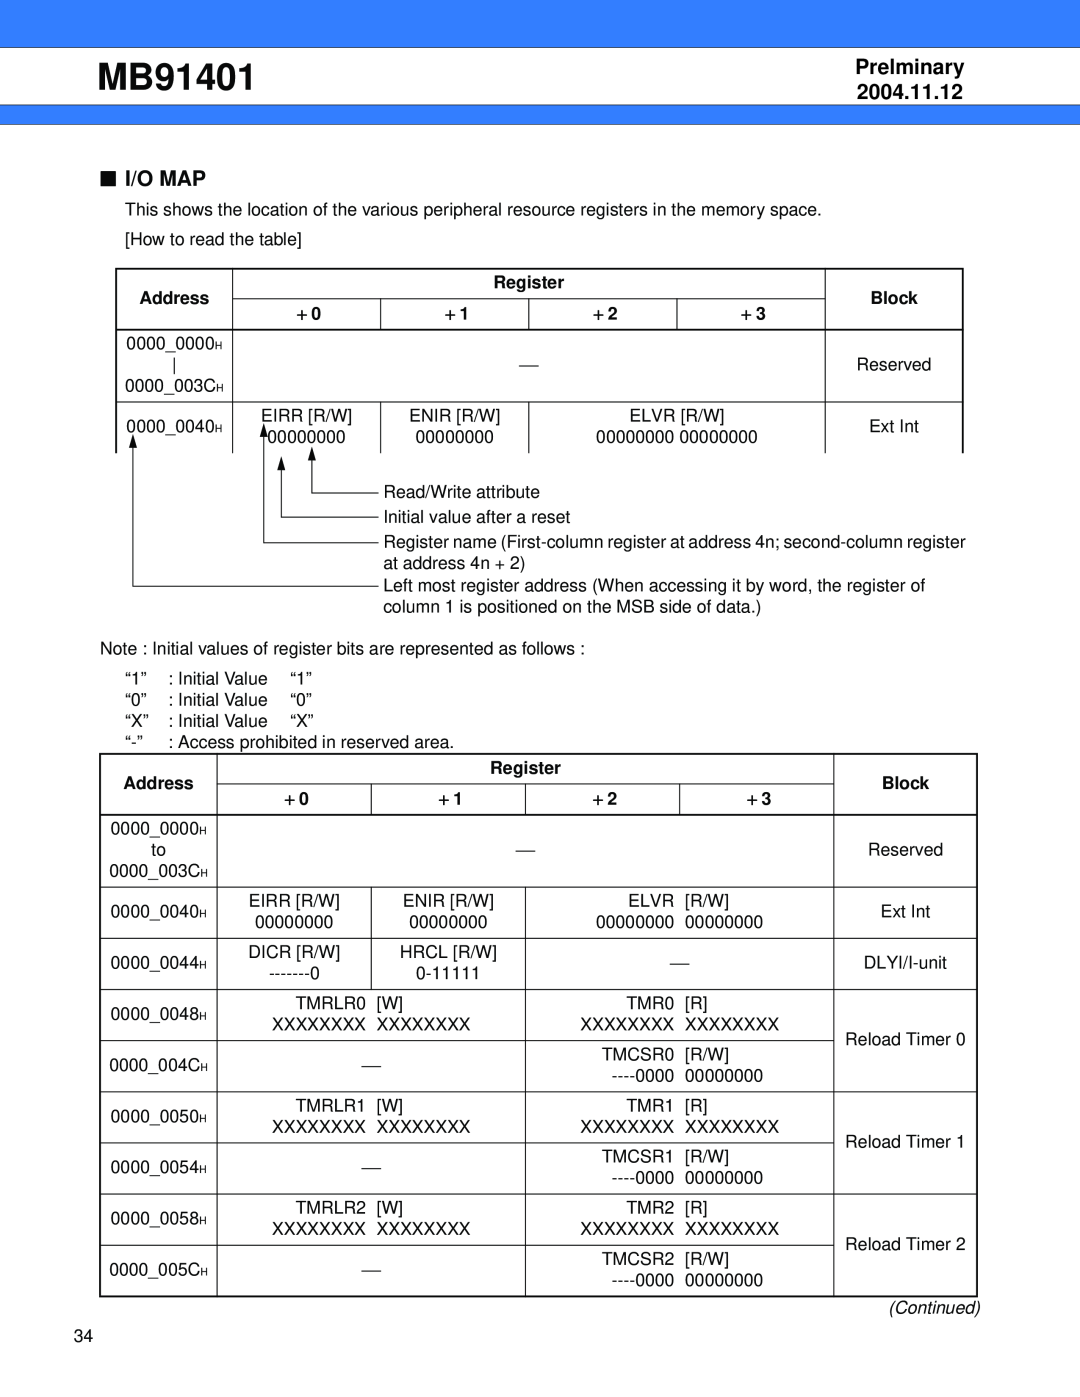 Fujitsu MB91401 manual I/O Map, Address, Register, Block, Prelminary, 2004.11.12 